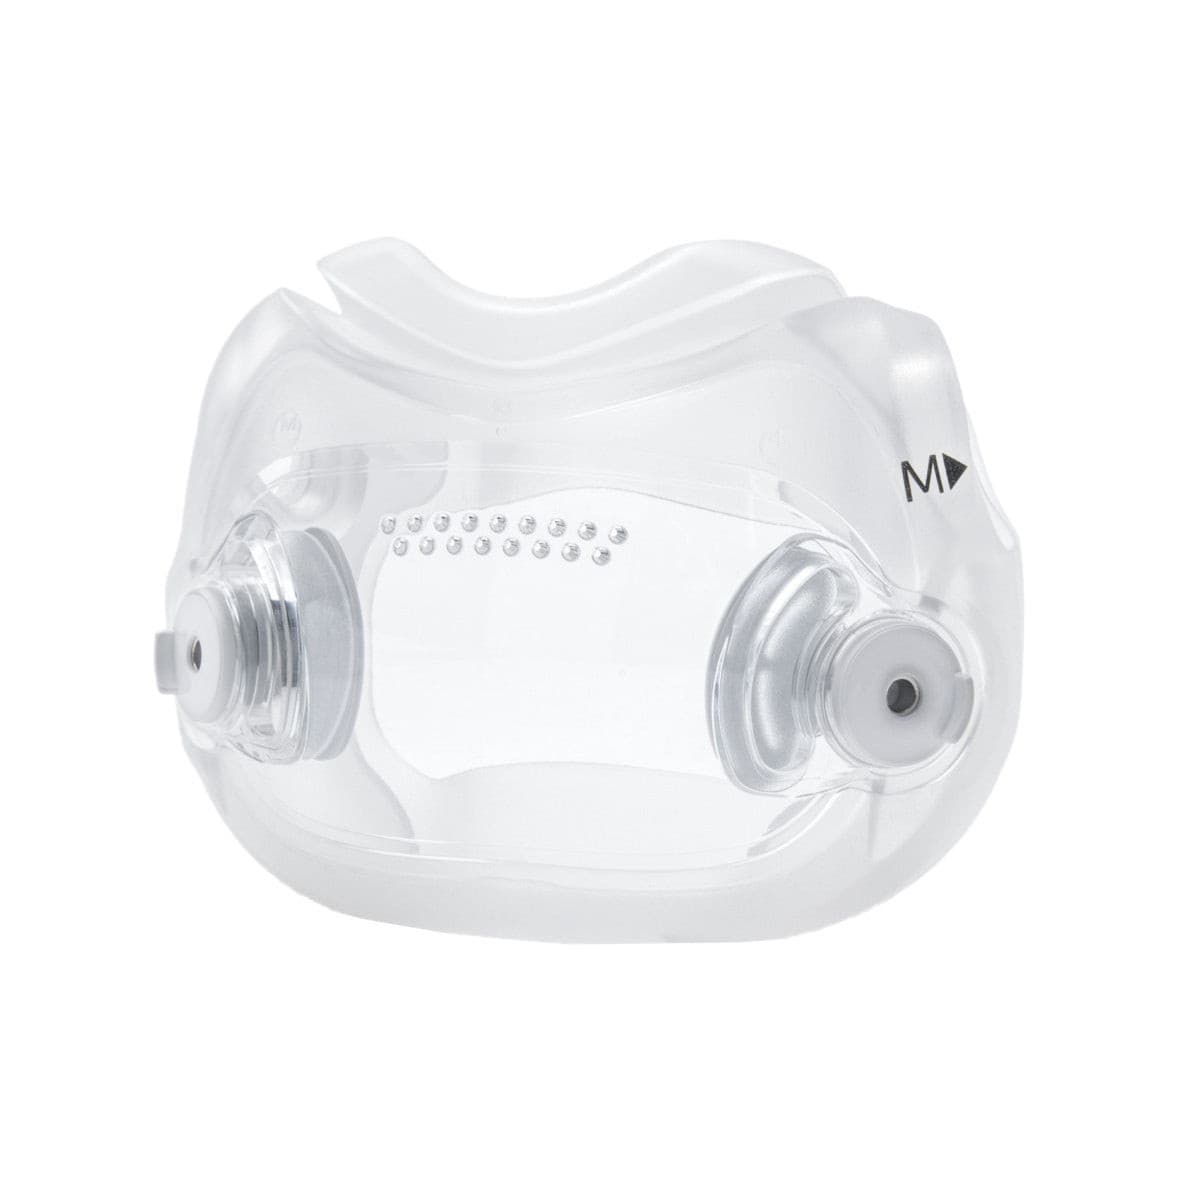 Cushions for the DreamWear Full Face CPAP Mask - Sleep Technologies